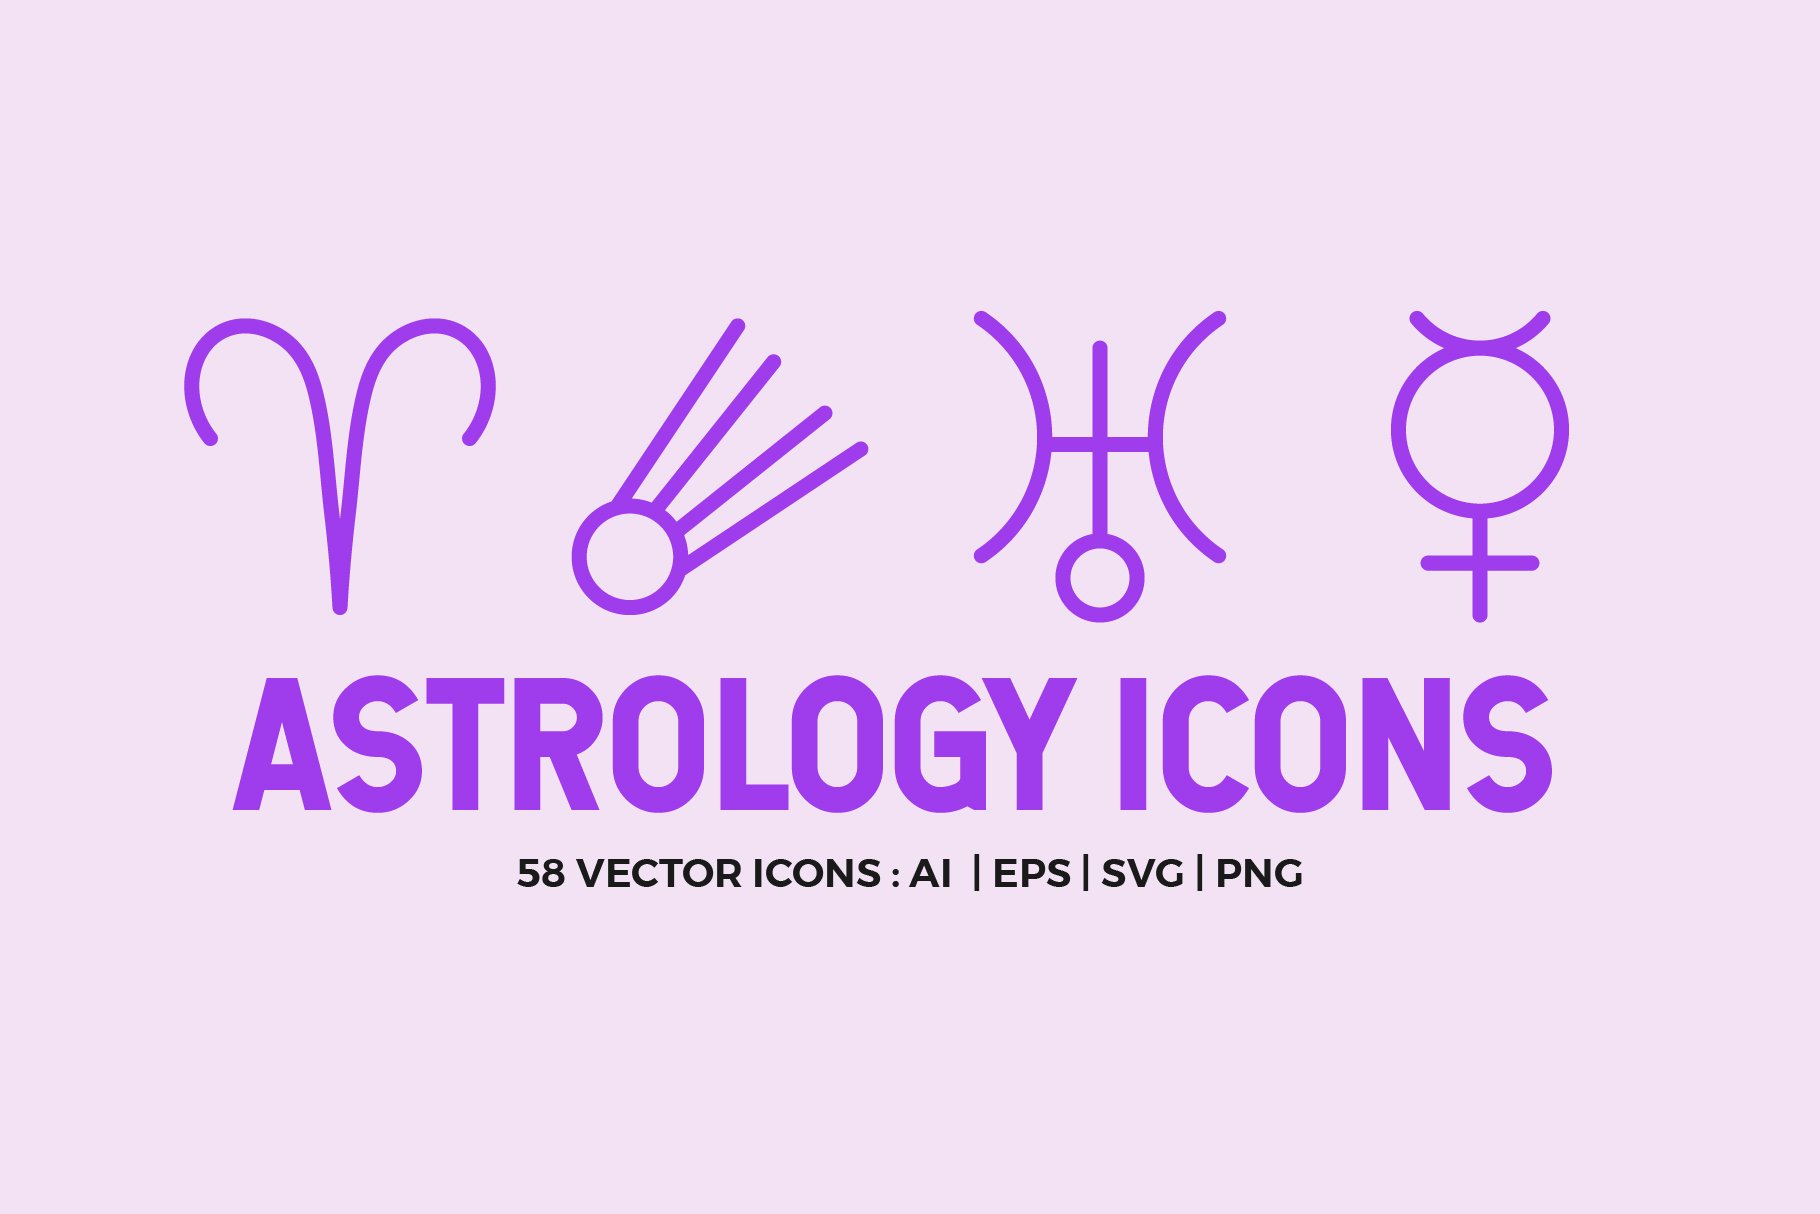 Astrology Symbols | Line Icon Set cover image.